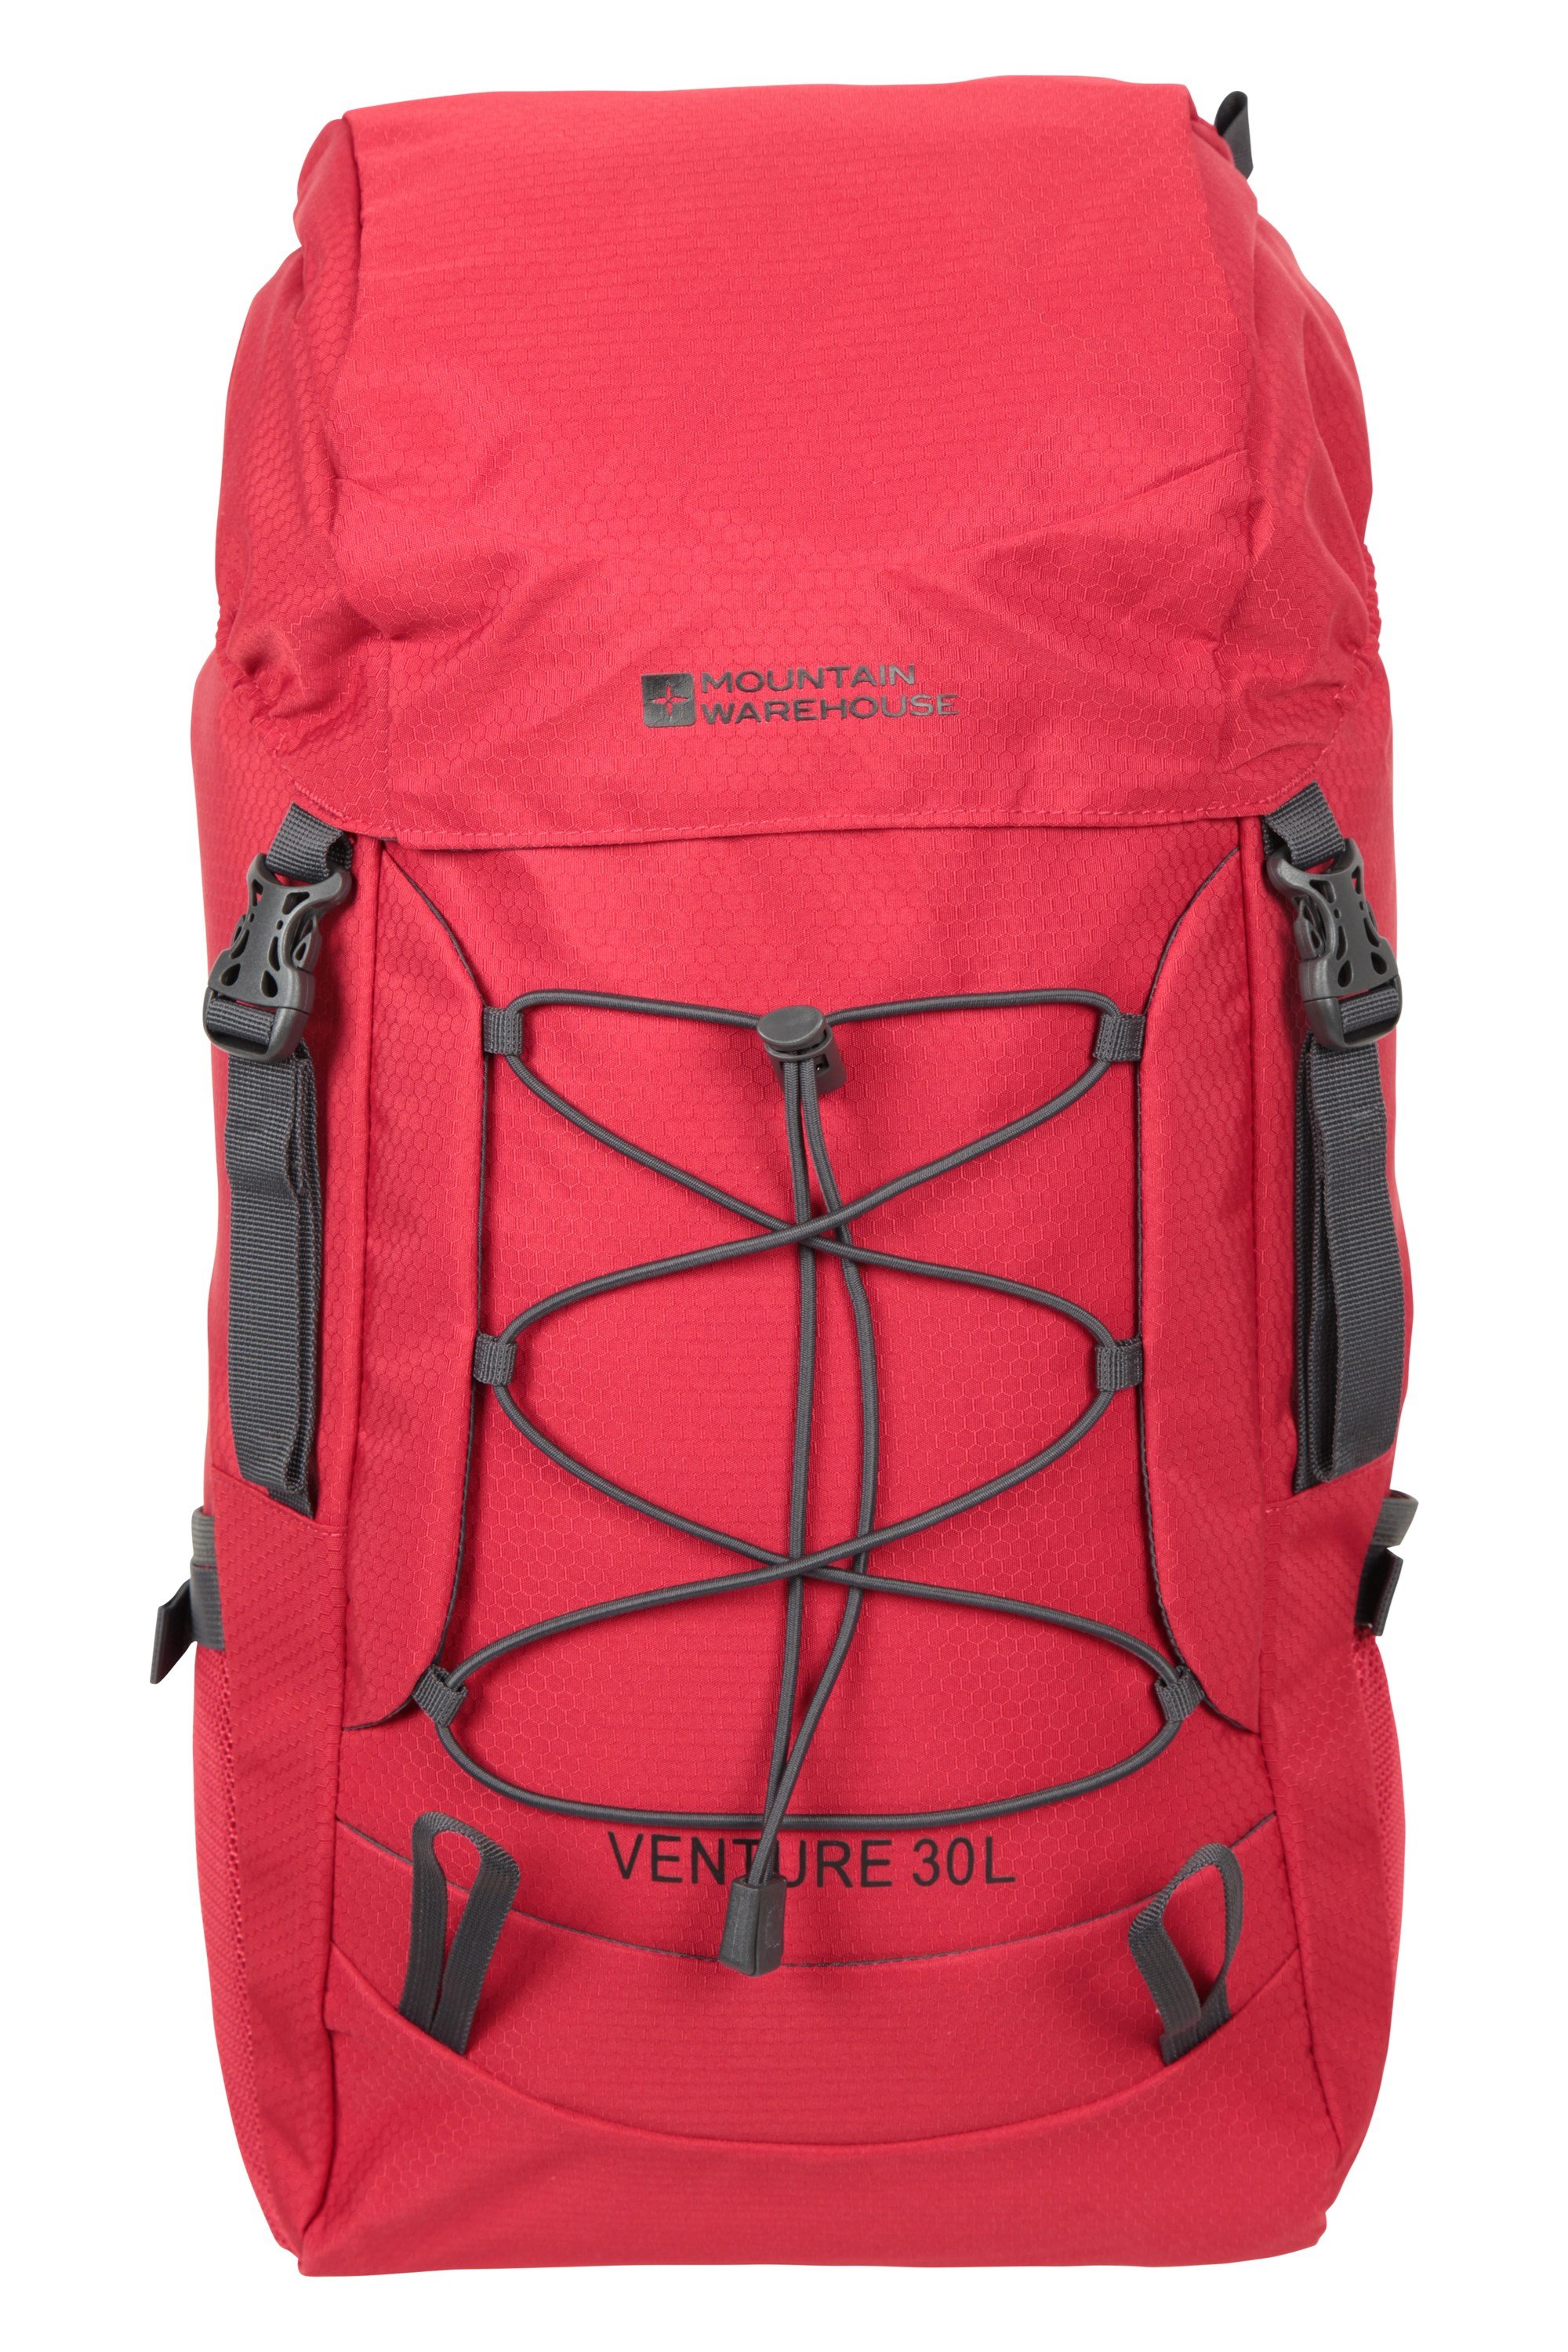 Venture 30l Backpack - Red